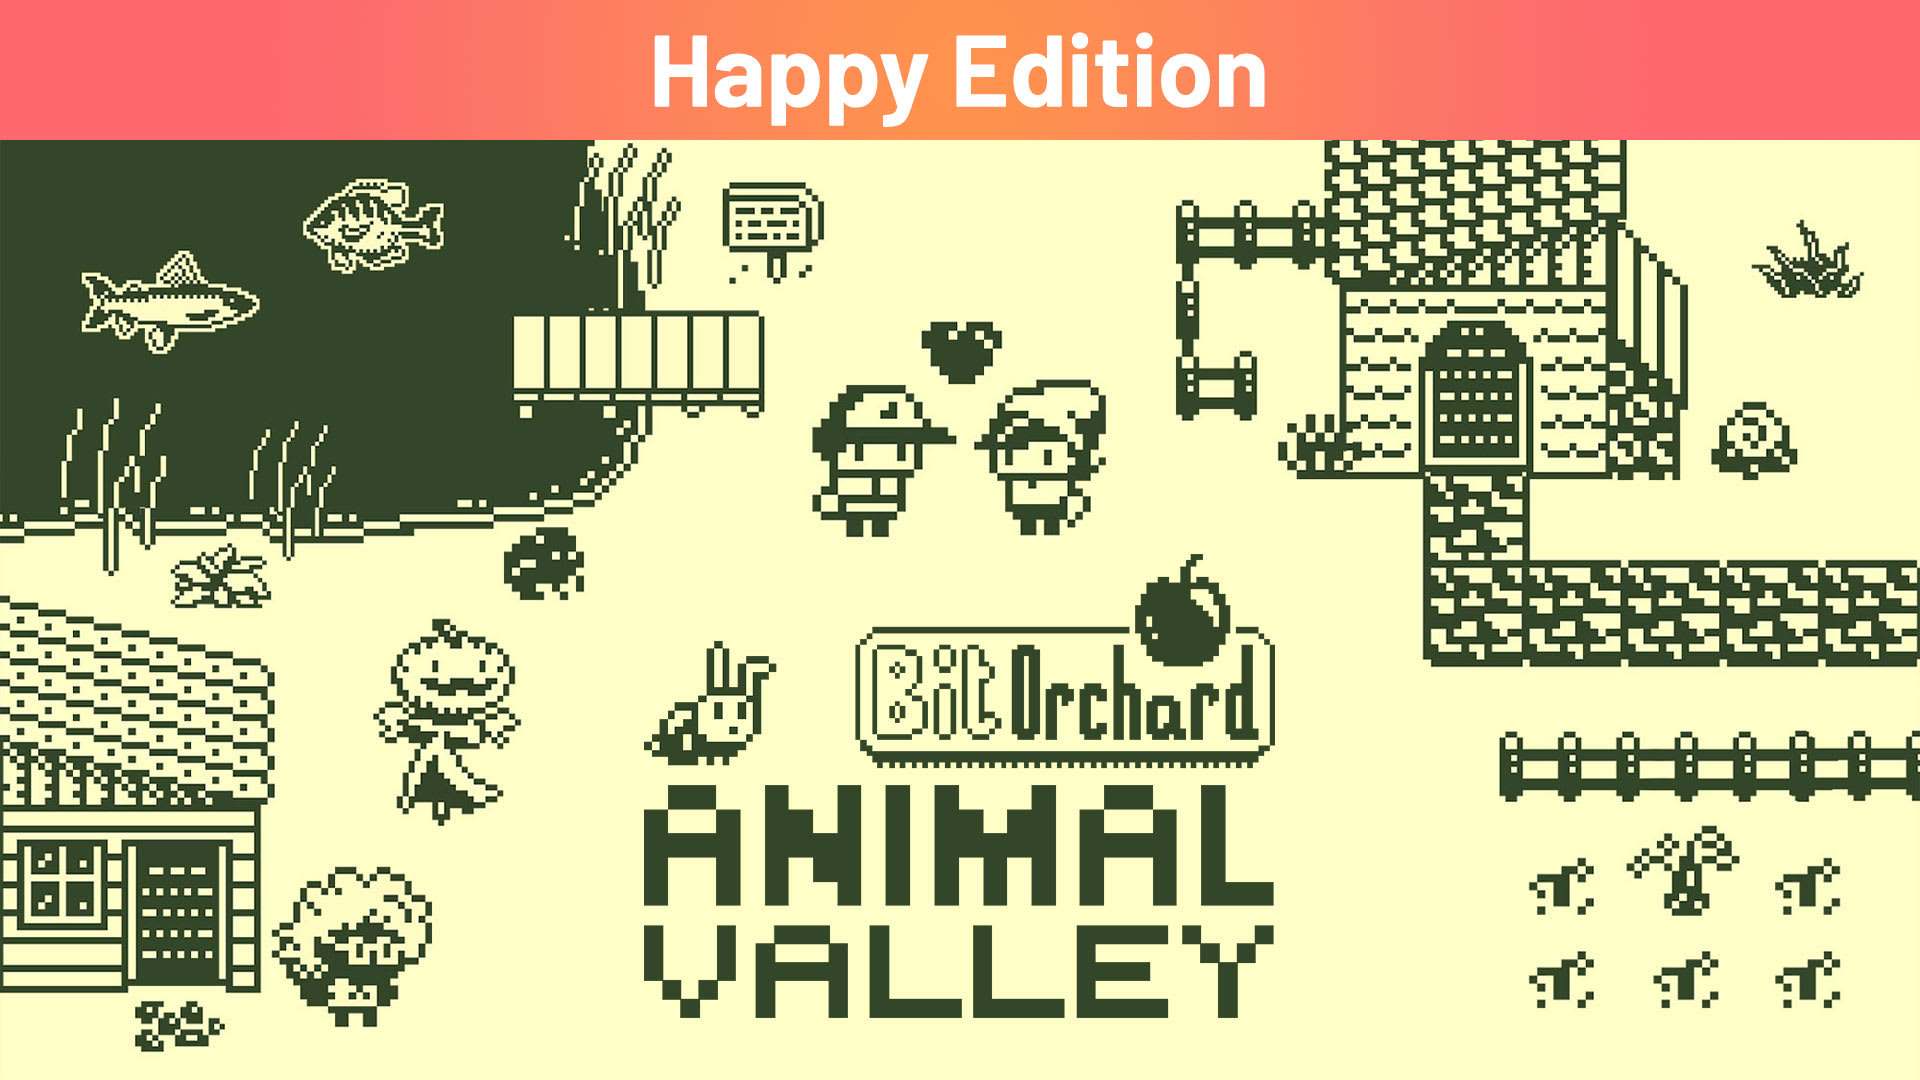 Bit Orchard: Animal Valley Happy Edition